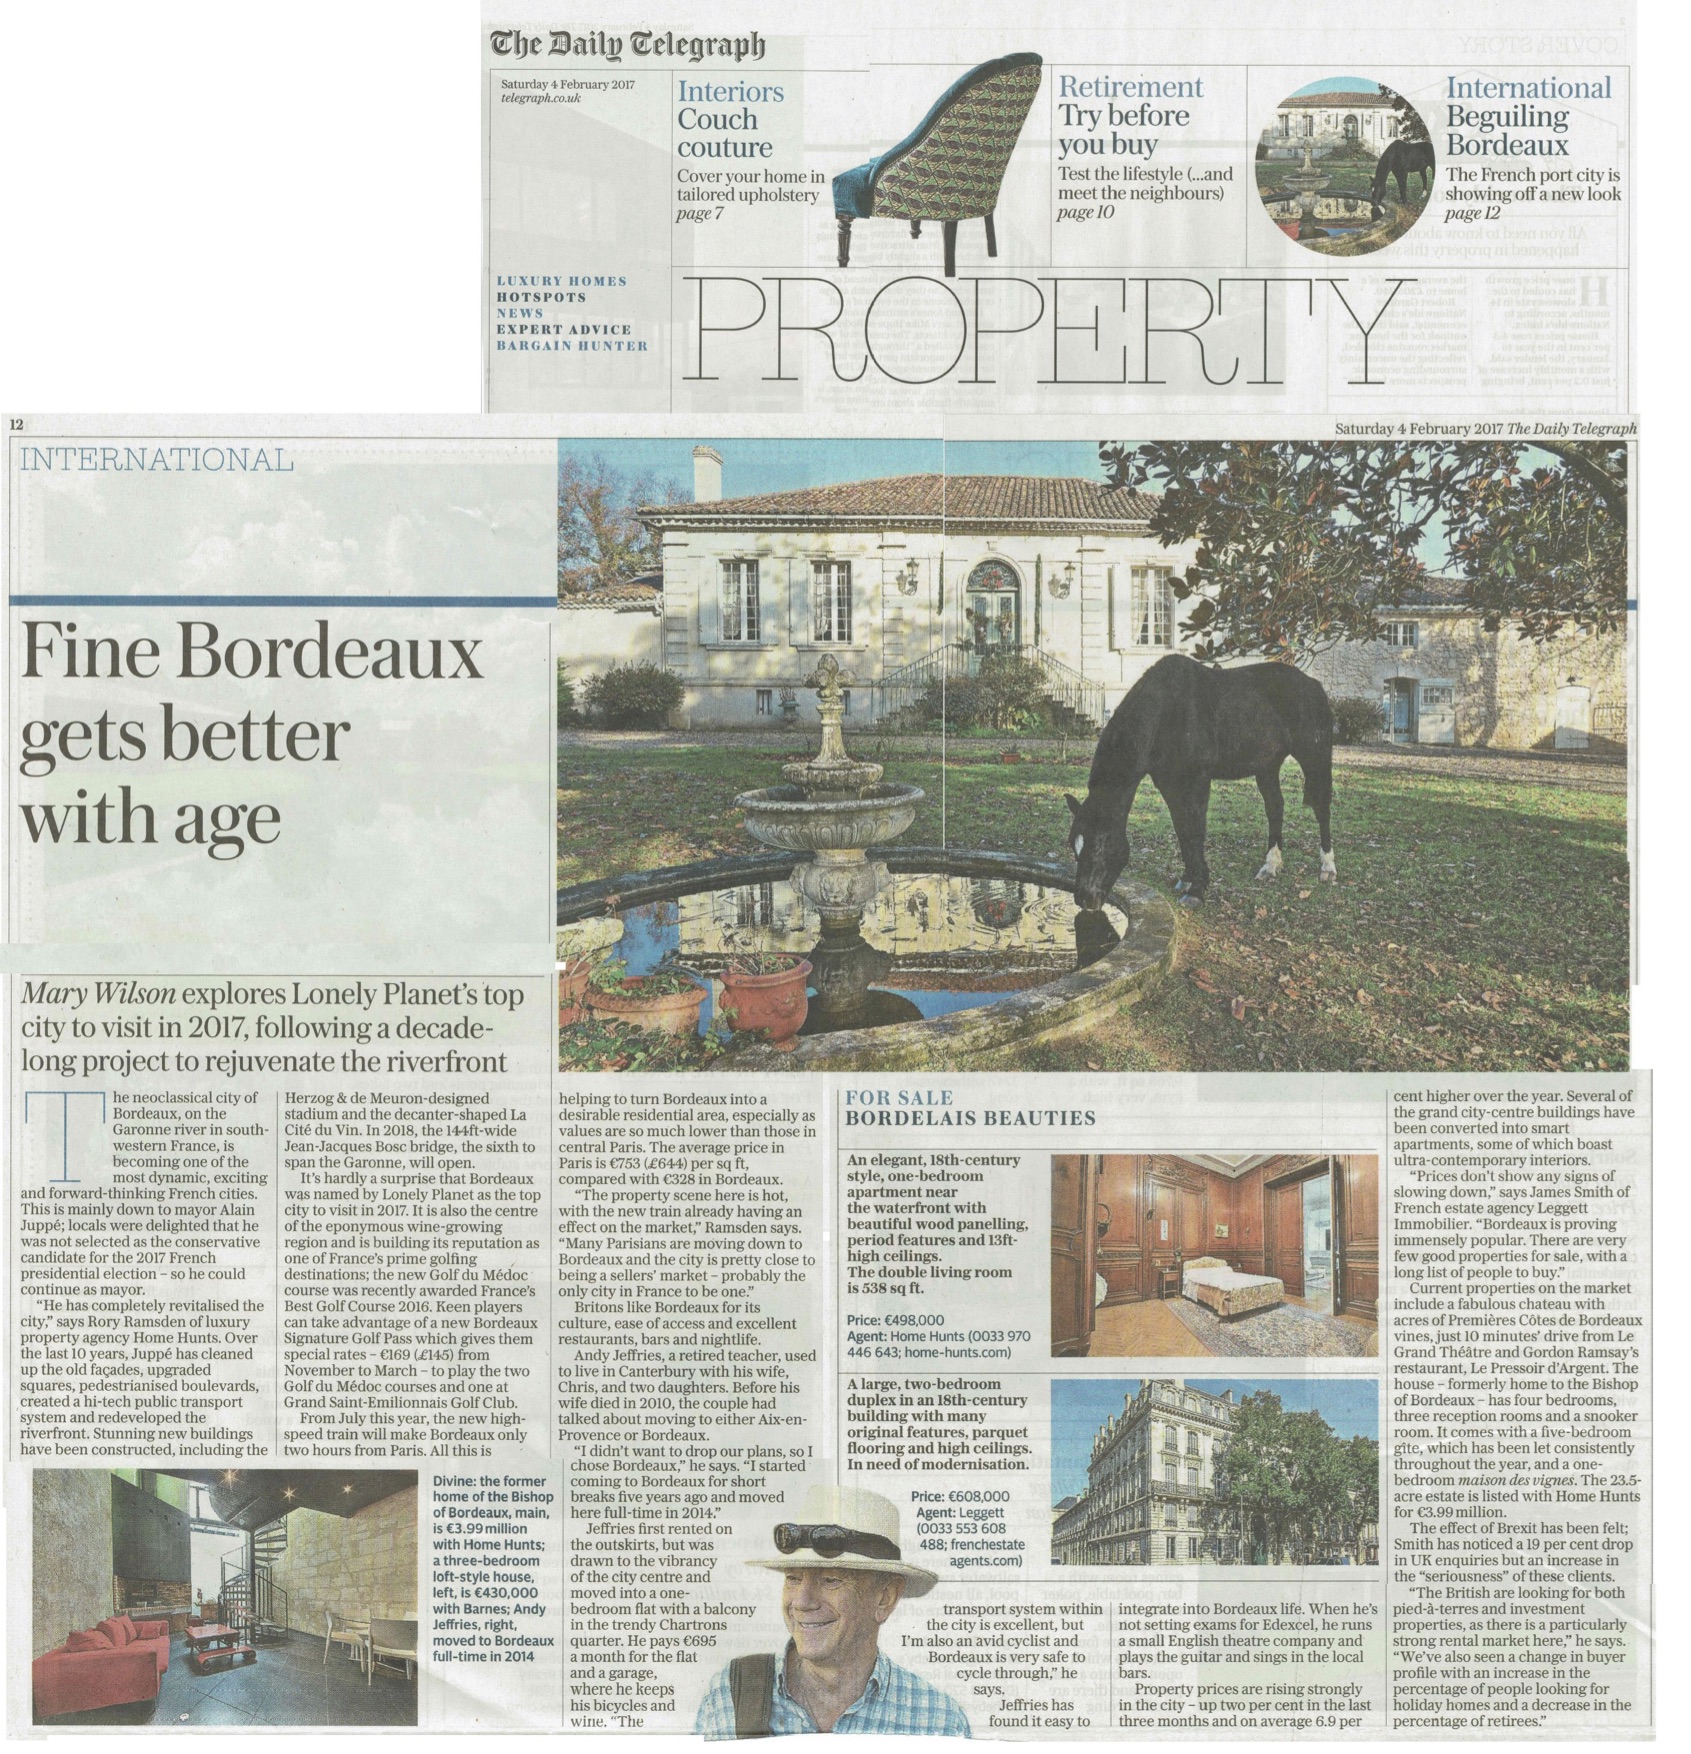 Daily Telegraph – The Bordeaux Property market